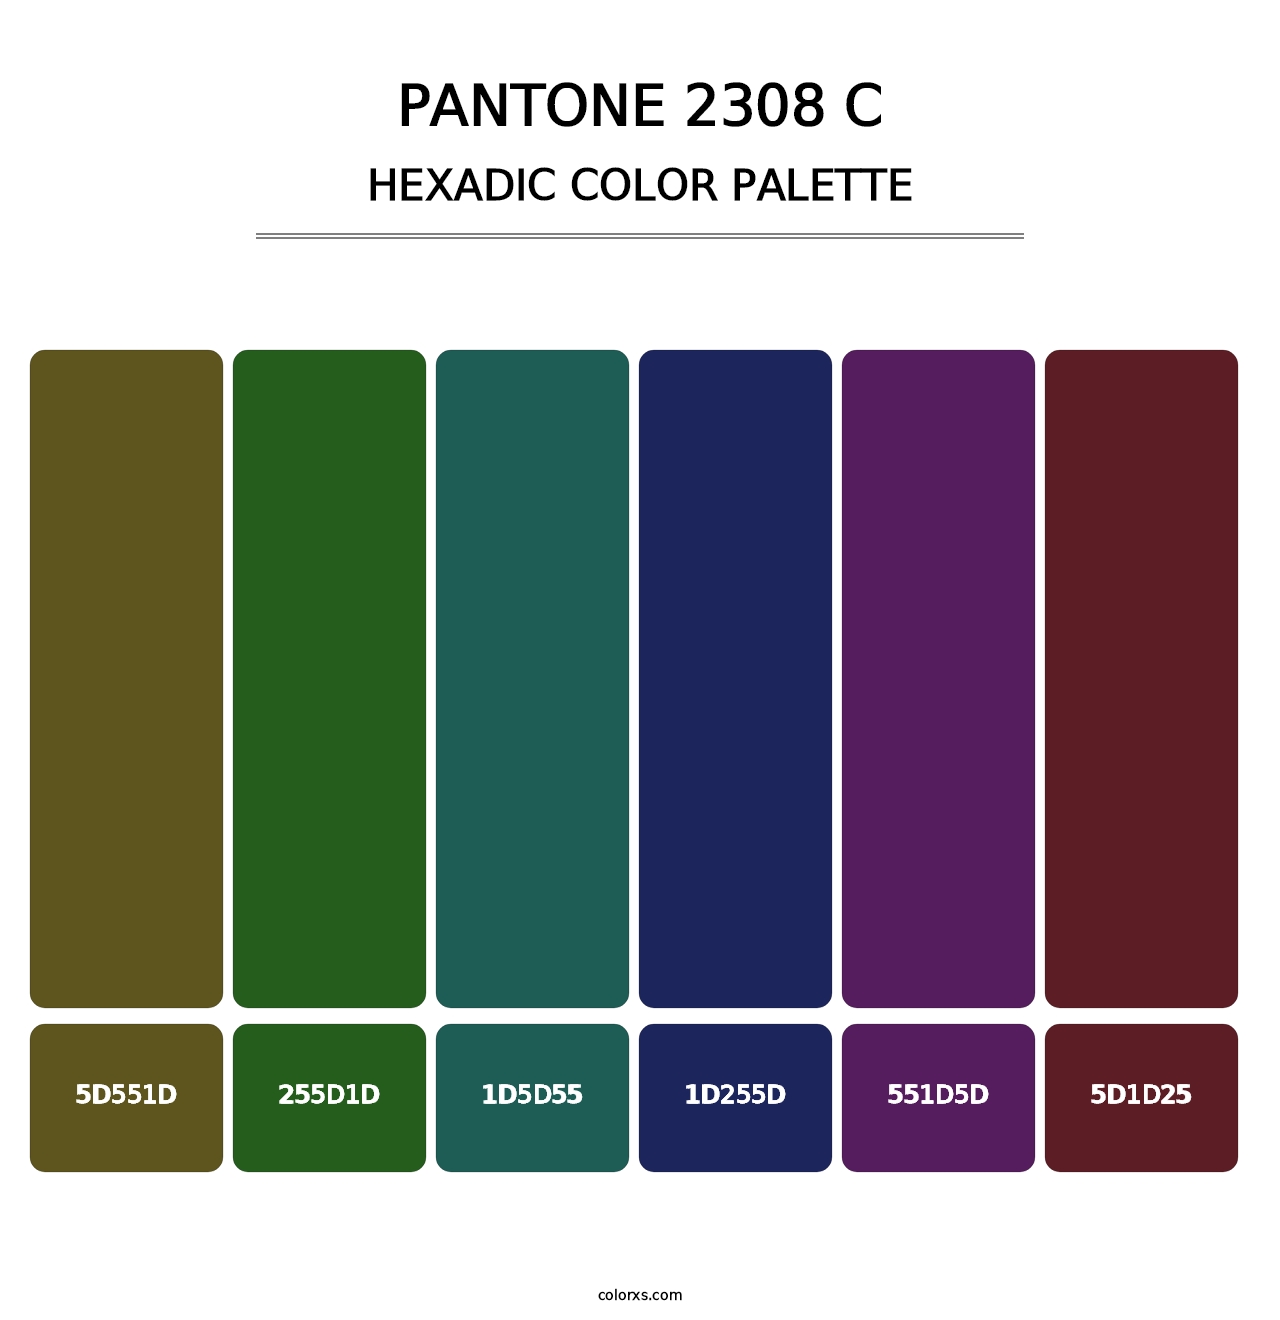 PANTONE 2308 C - Hexadic Color Palette